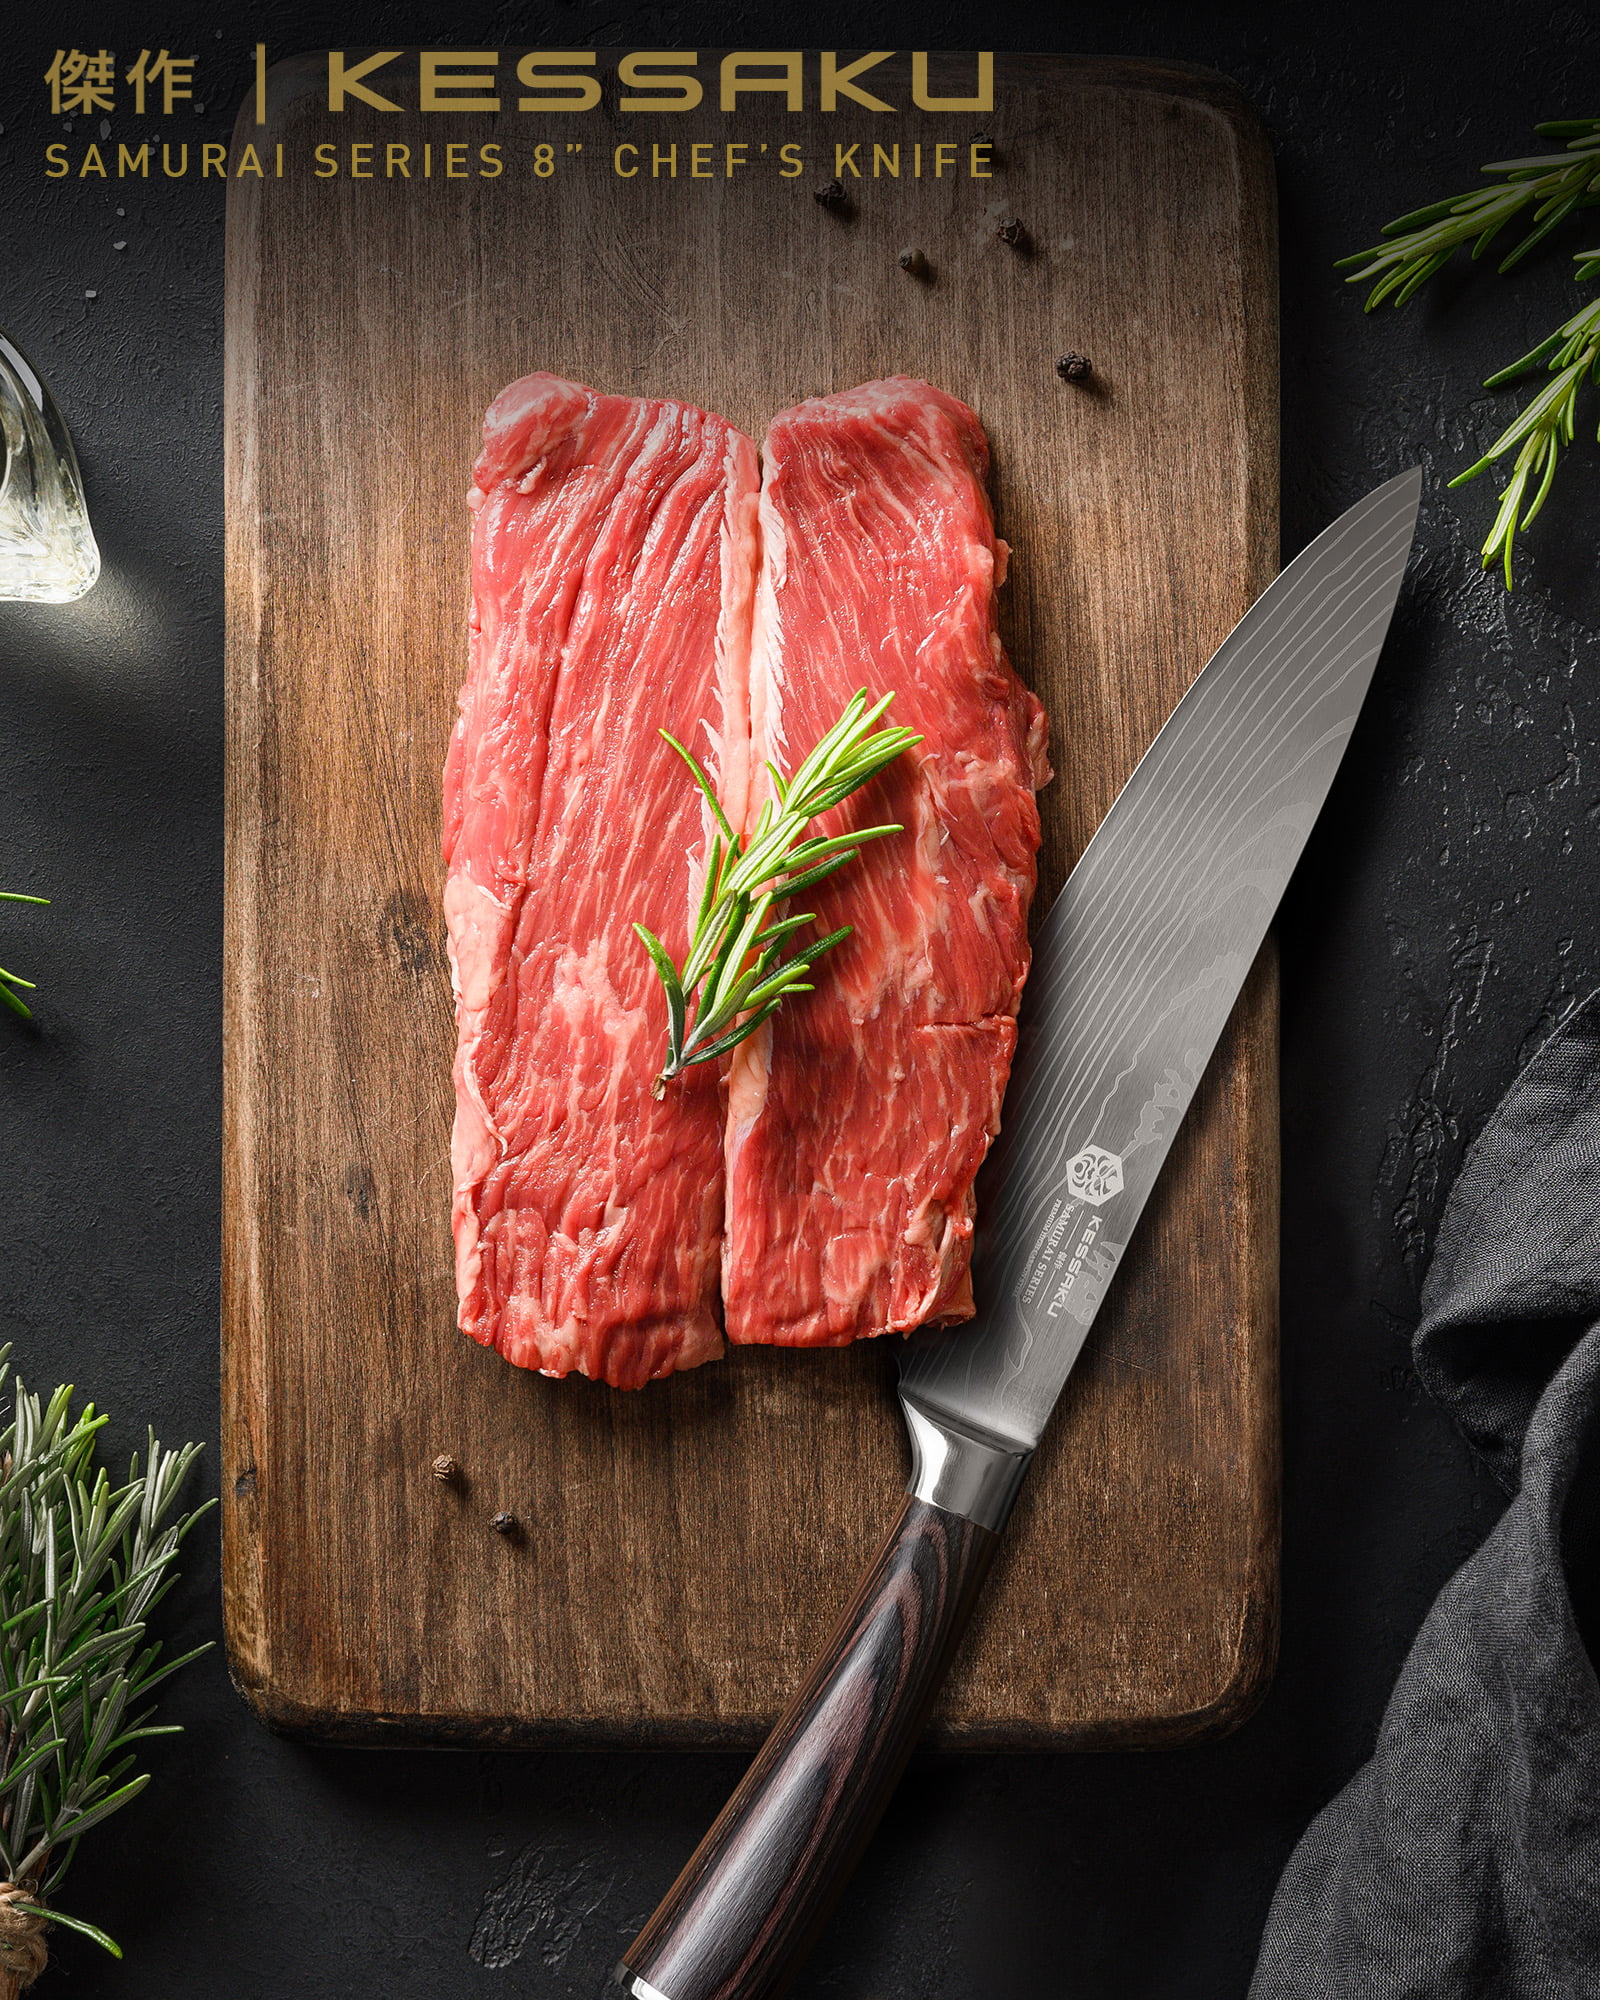 Home Kitchen Steel Chef Knife: Premium Razor Sharp 8 Inch Stain & Wear – I  Want Home & Kitchen